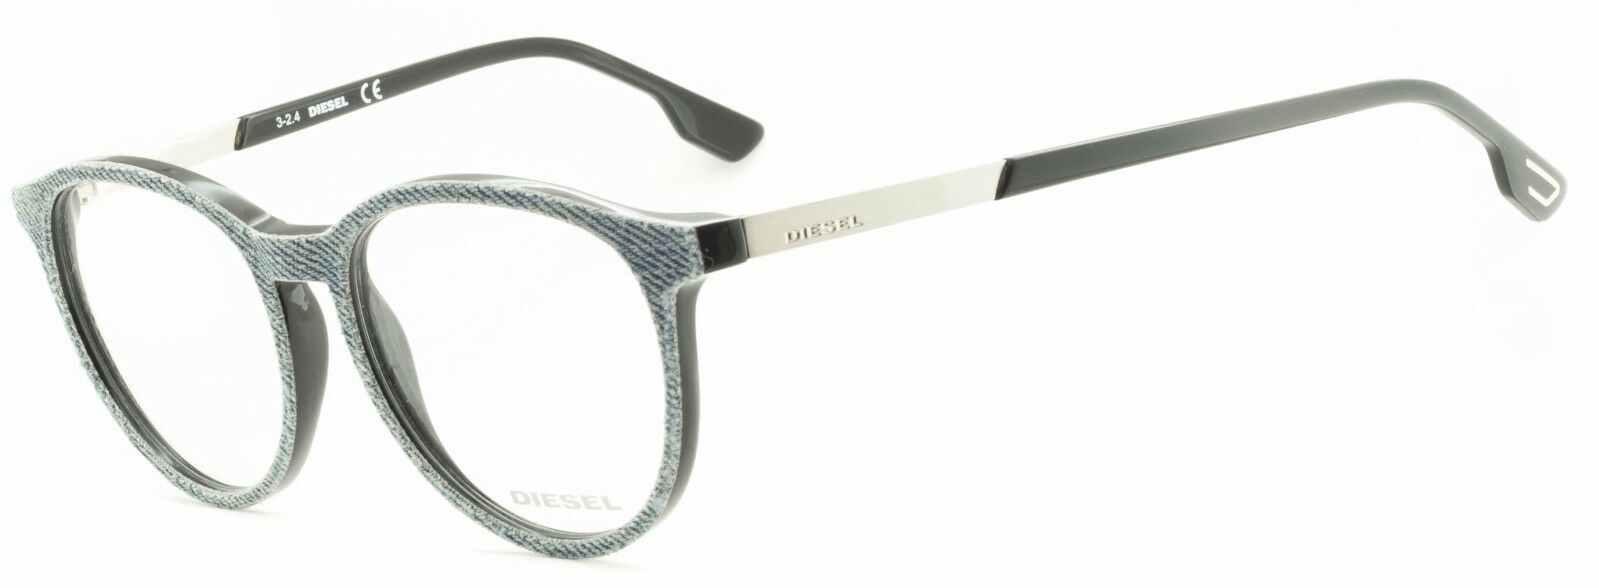 DIESEL DL 5117 col 002 Eyewear FRAMES RX Optical Eyeglasses Glasses New - BNIB